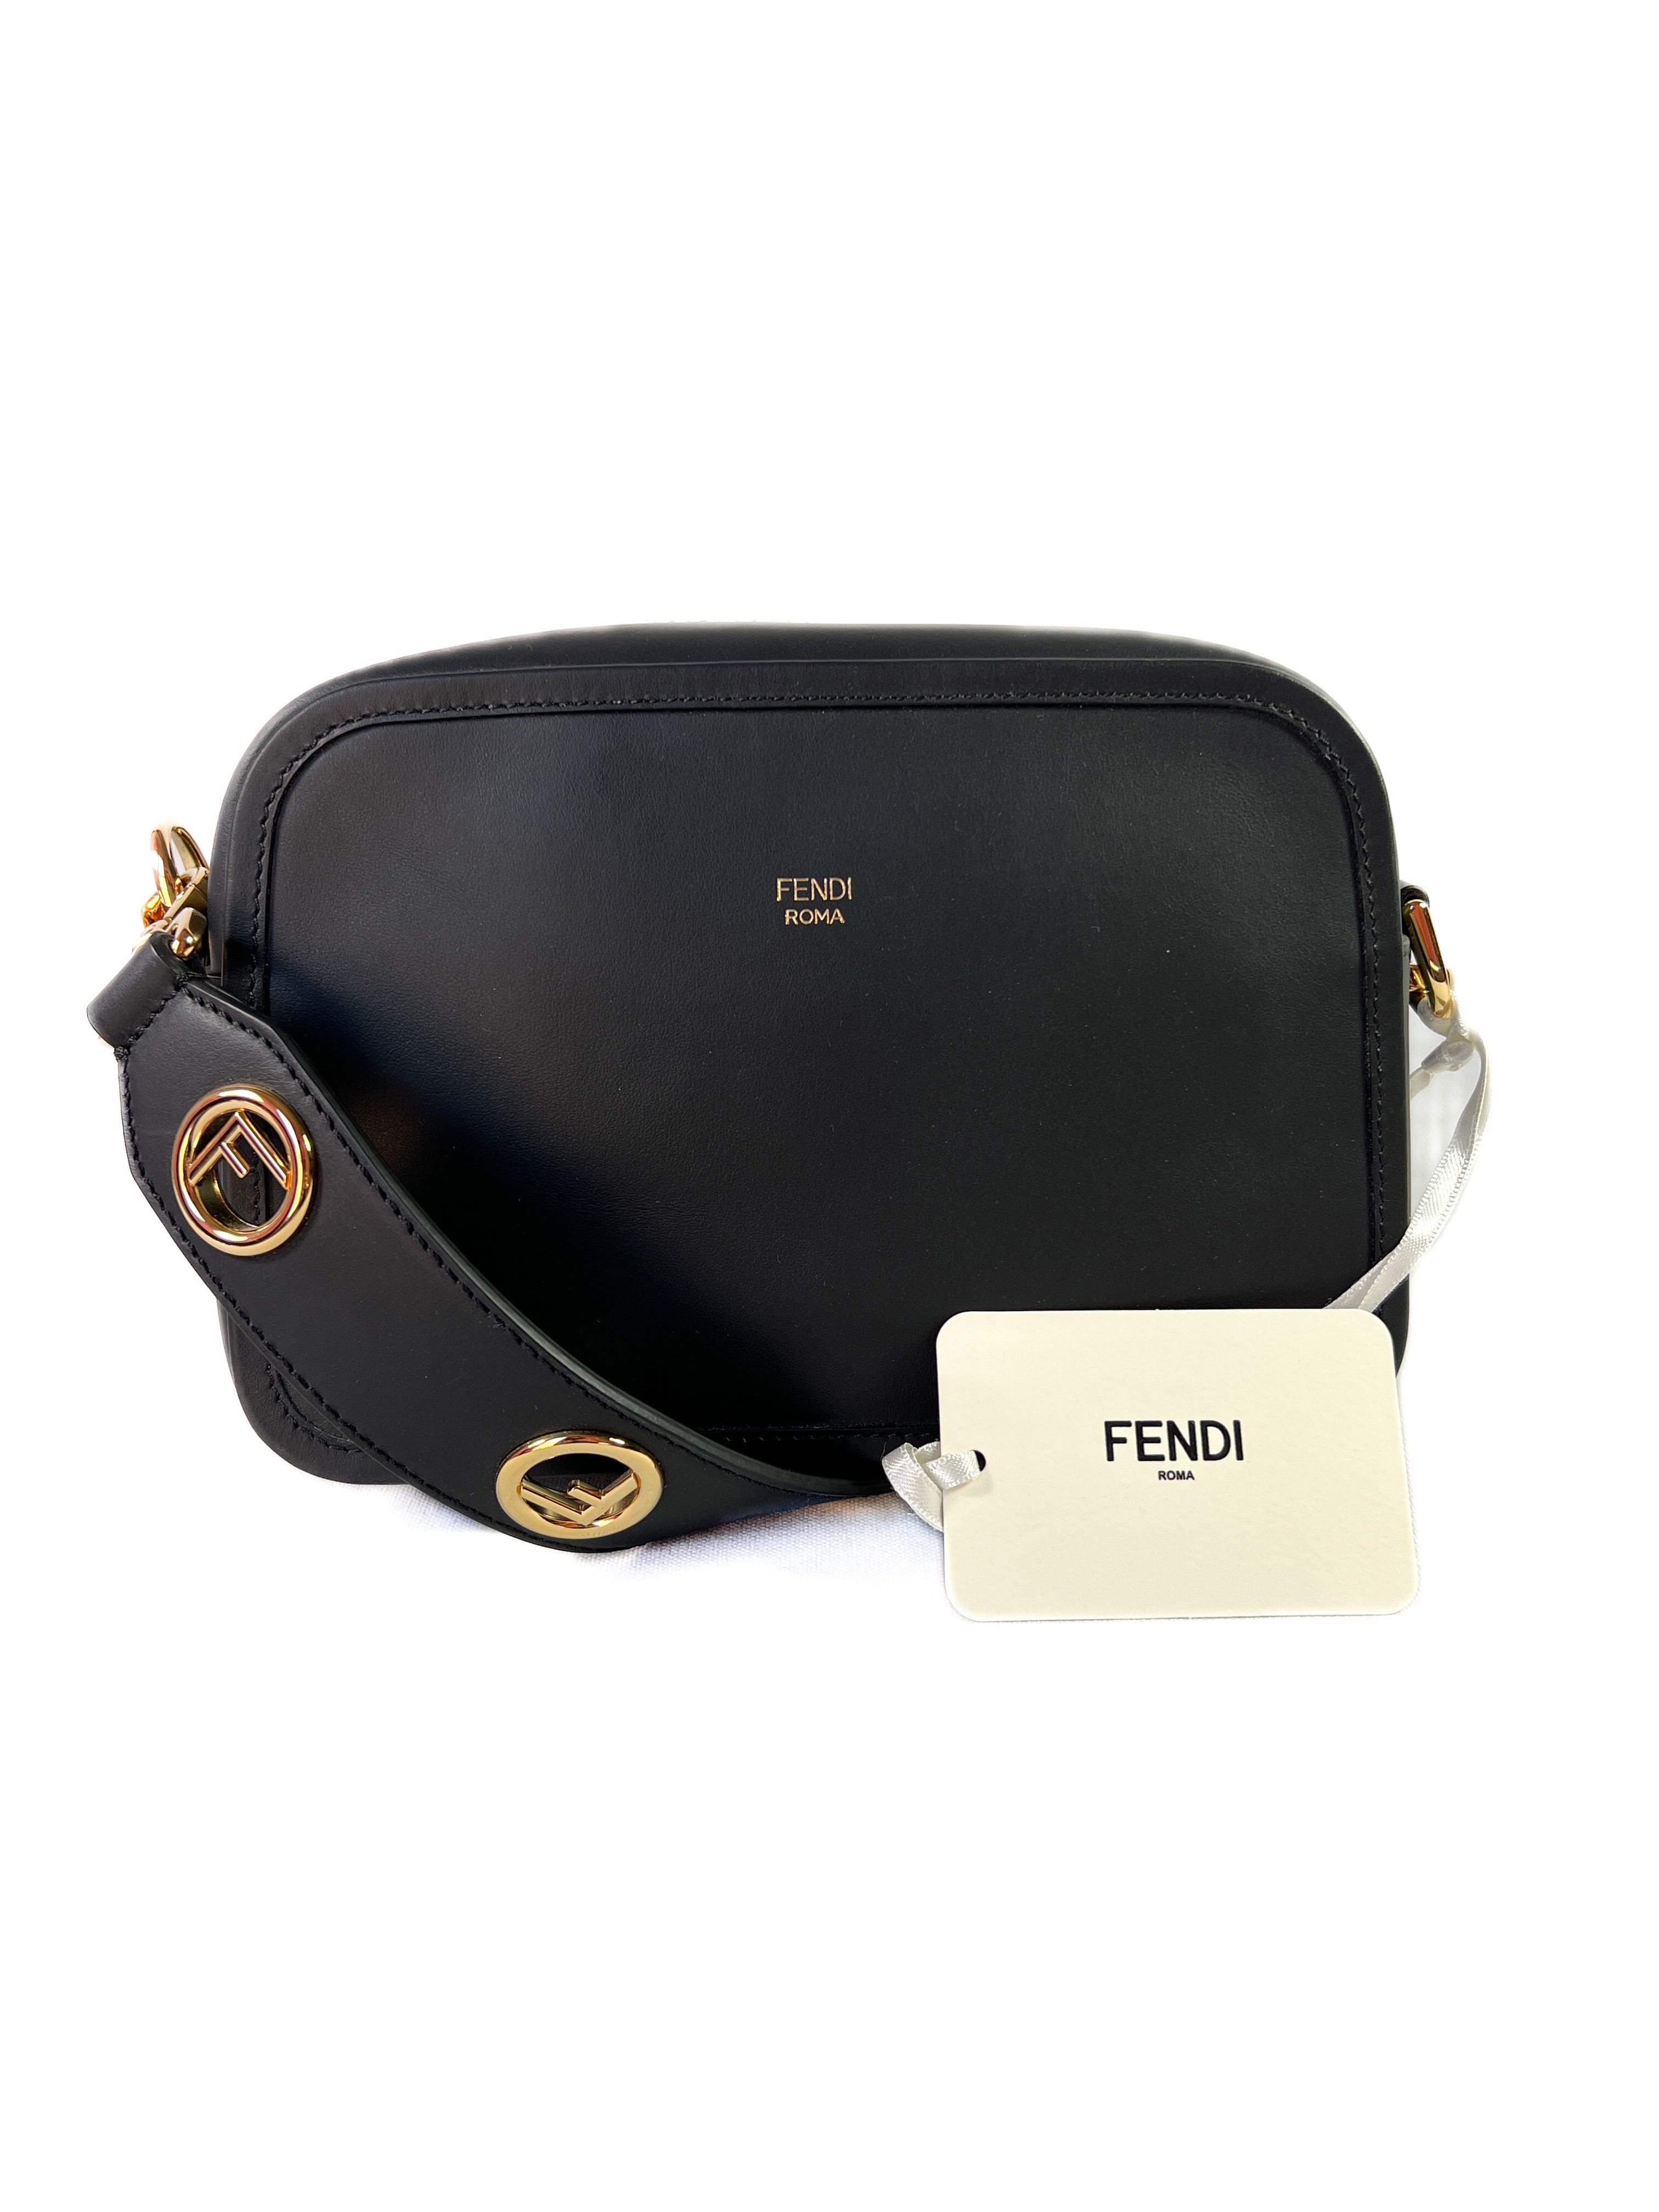 Fendi Roma Camera Case - Black leather bag